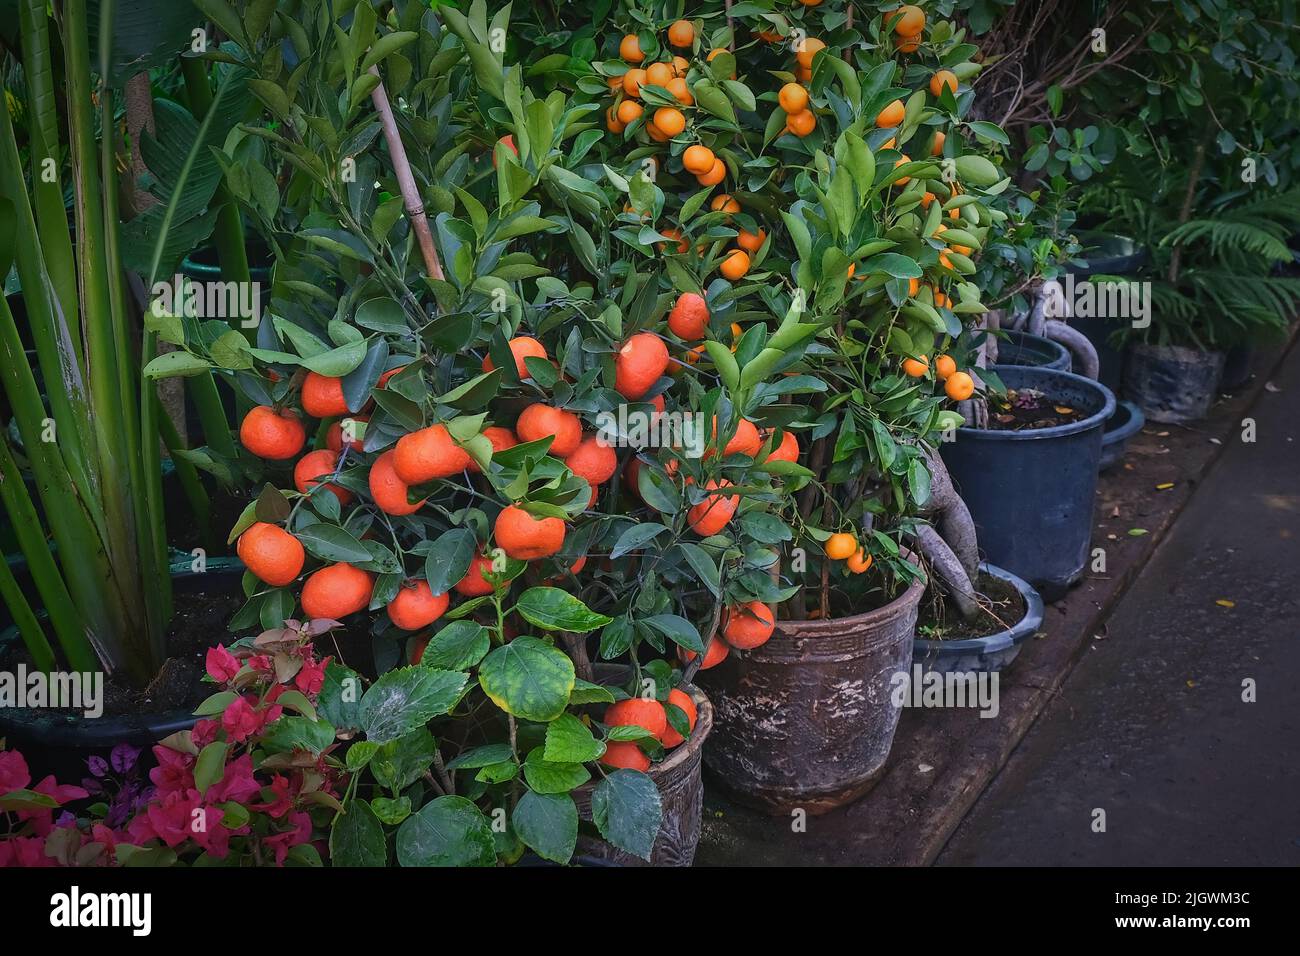 Miniature citrus tangerine, orange, and kumquat trees with fruits in outdoor garden shop. Mandarin trees potted plants Stock Photo